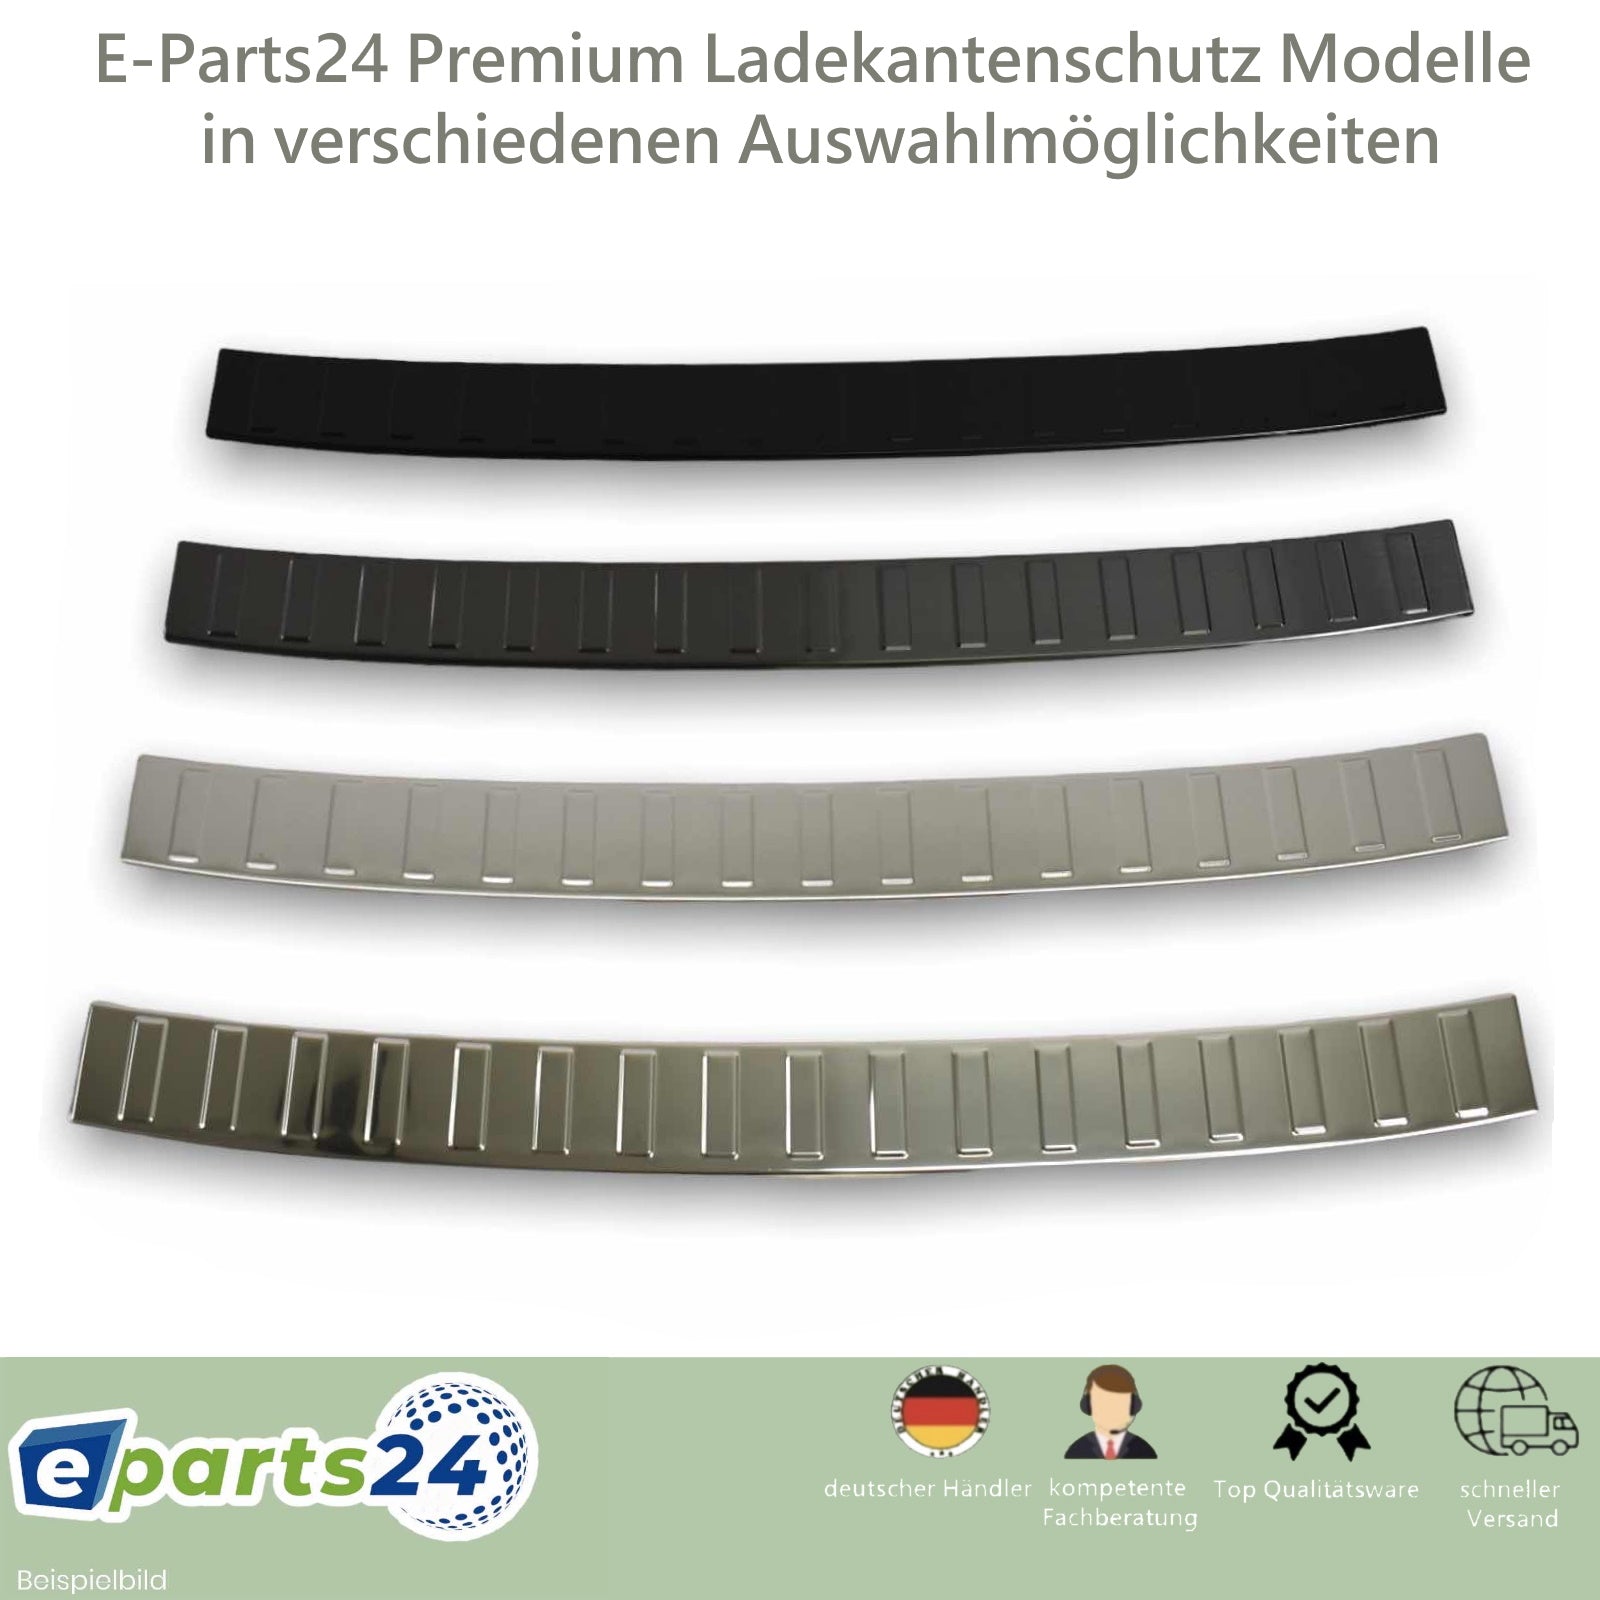 2010-2015 VW E-Parts24 Ladekantenschutz Edelstahl Bj 1T3 g Heckschutz – für Touran